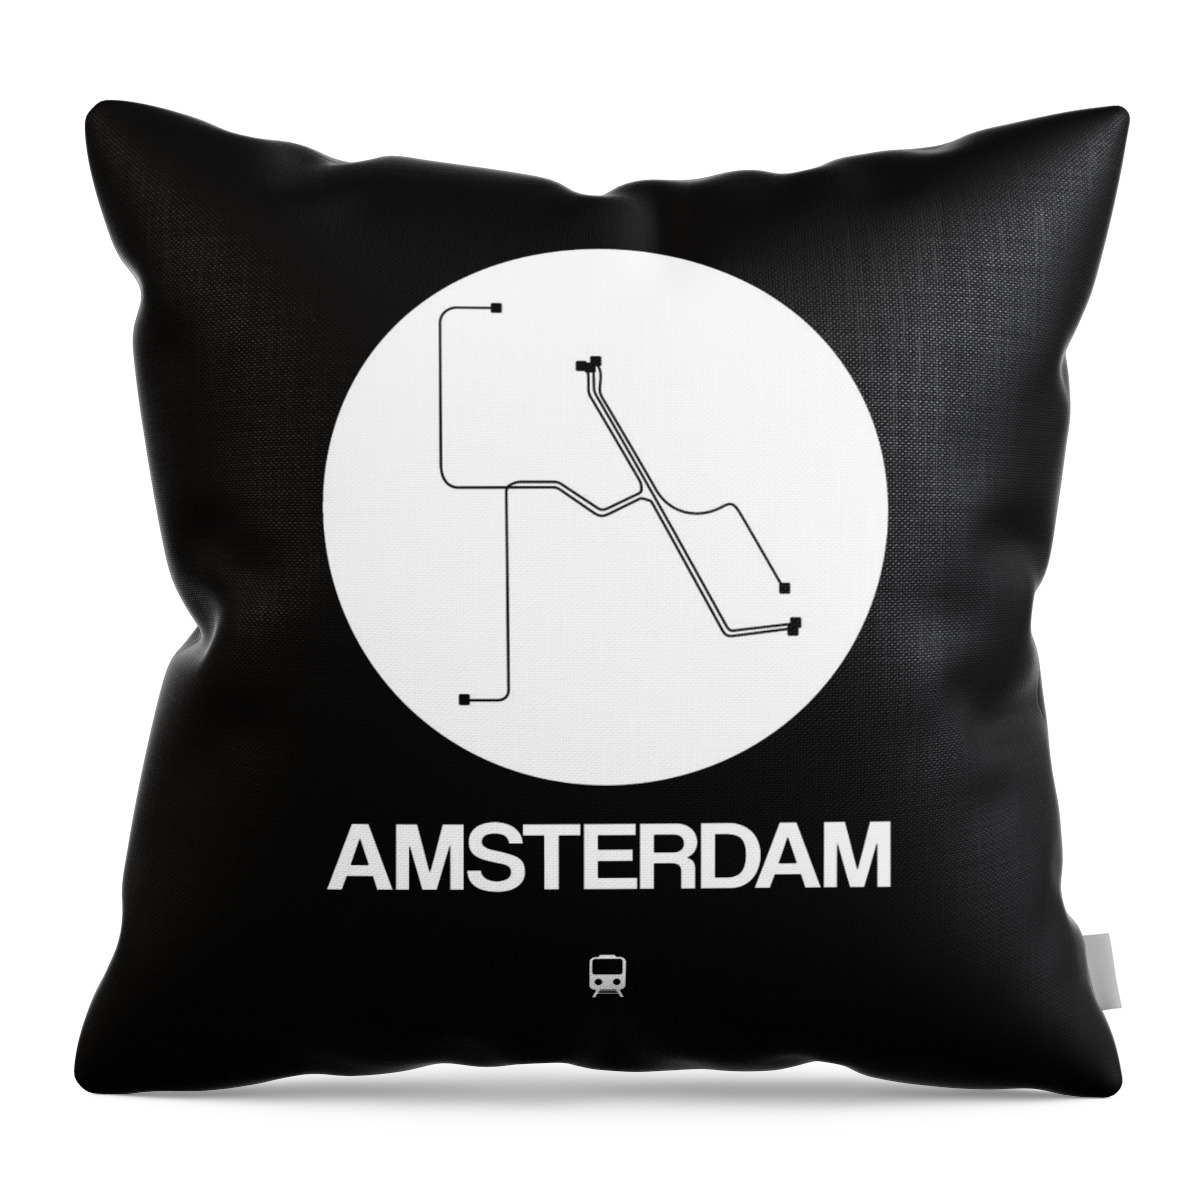 Amsterdam Throw Pillow featuring the digital art Amsterdam White Subway Map #1 by Naxart Studio